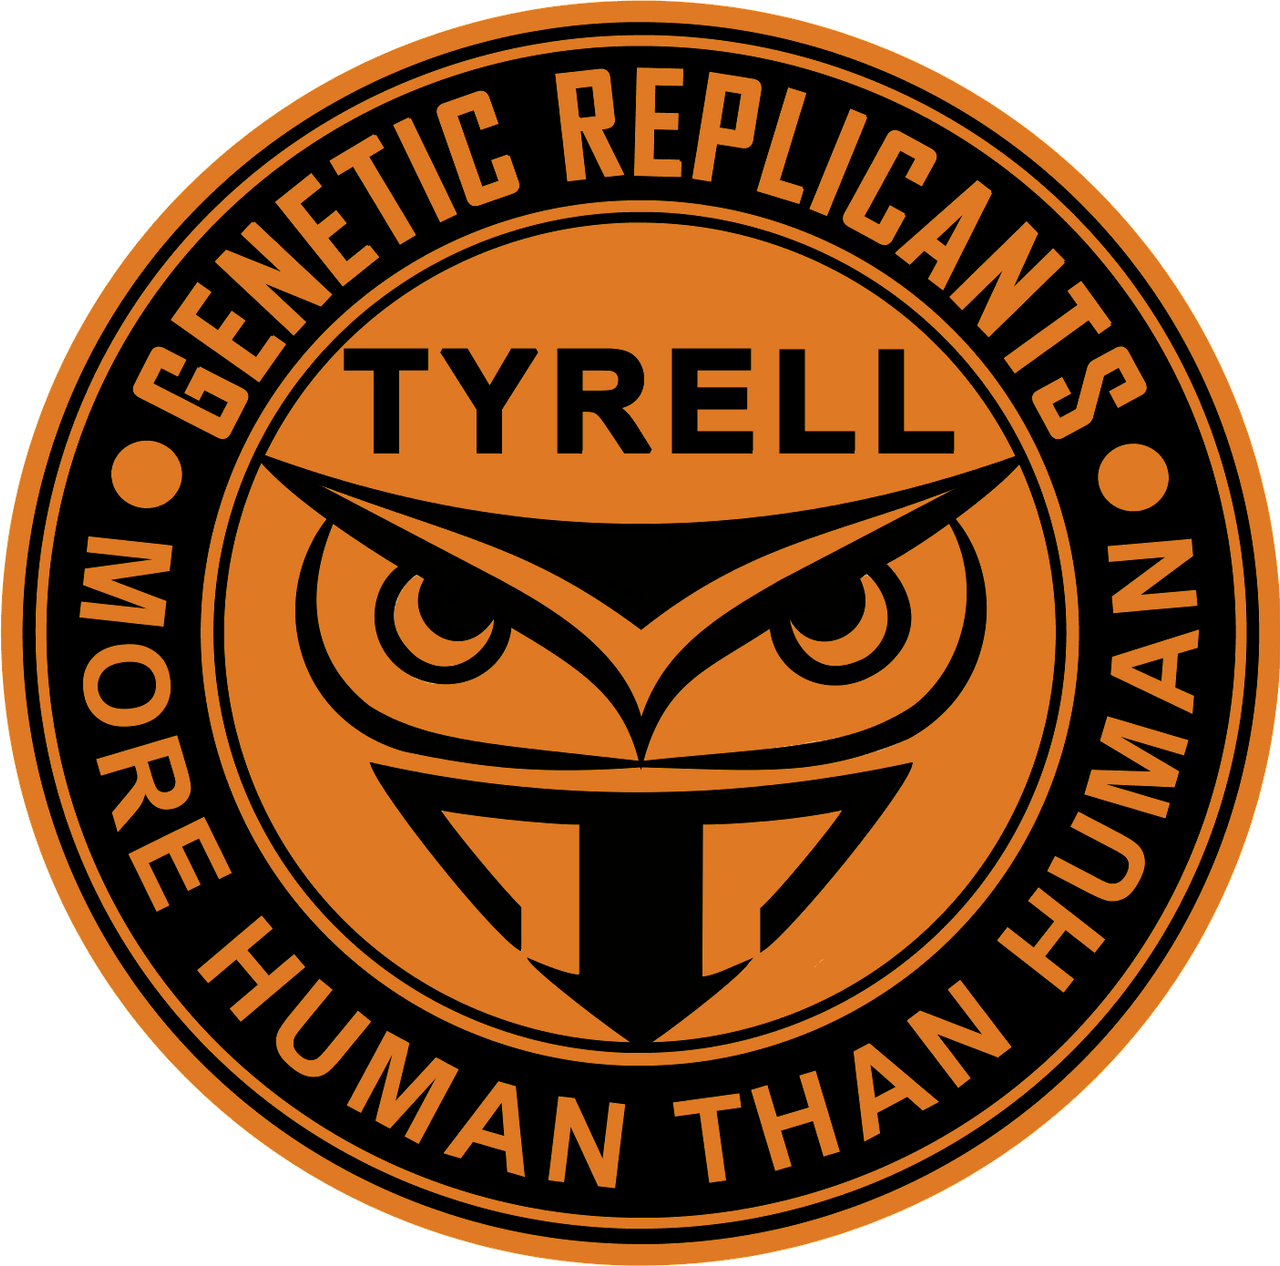 Blade Runner Tyrell Corporation Logo